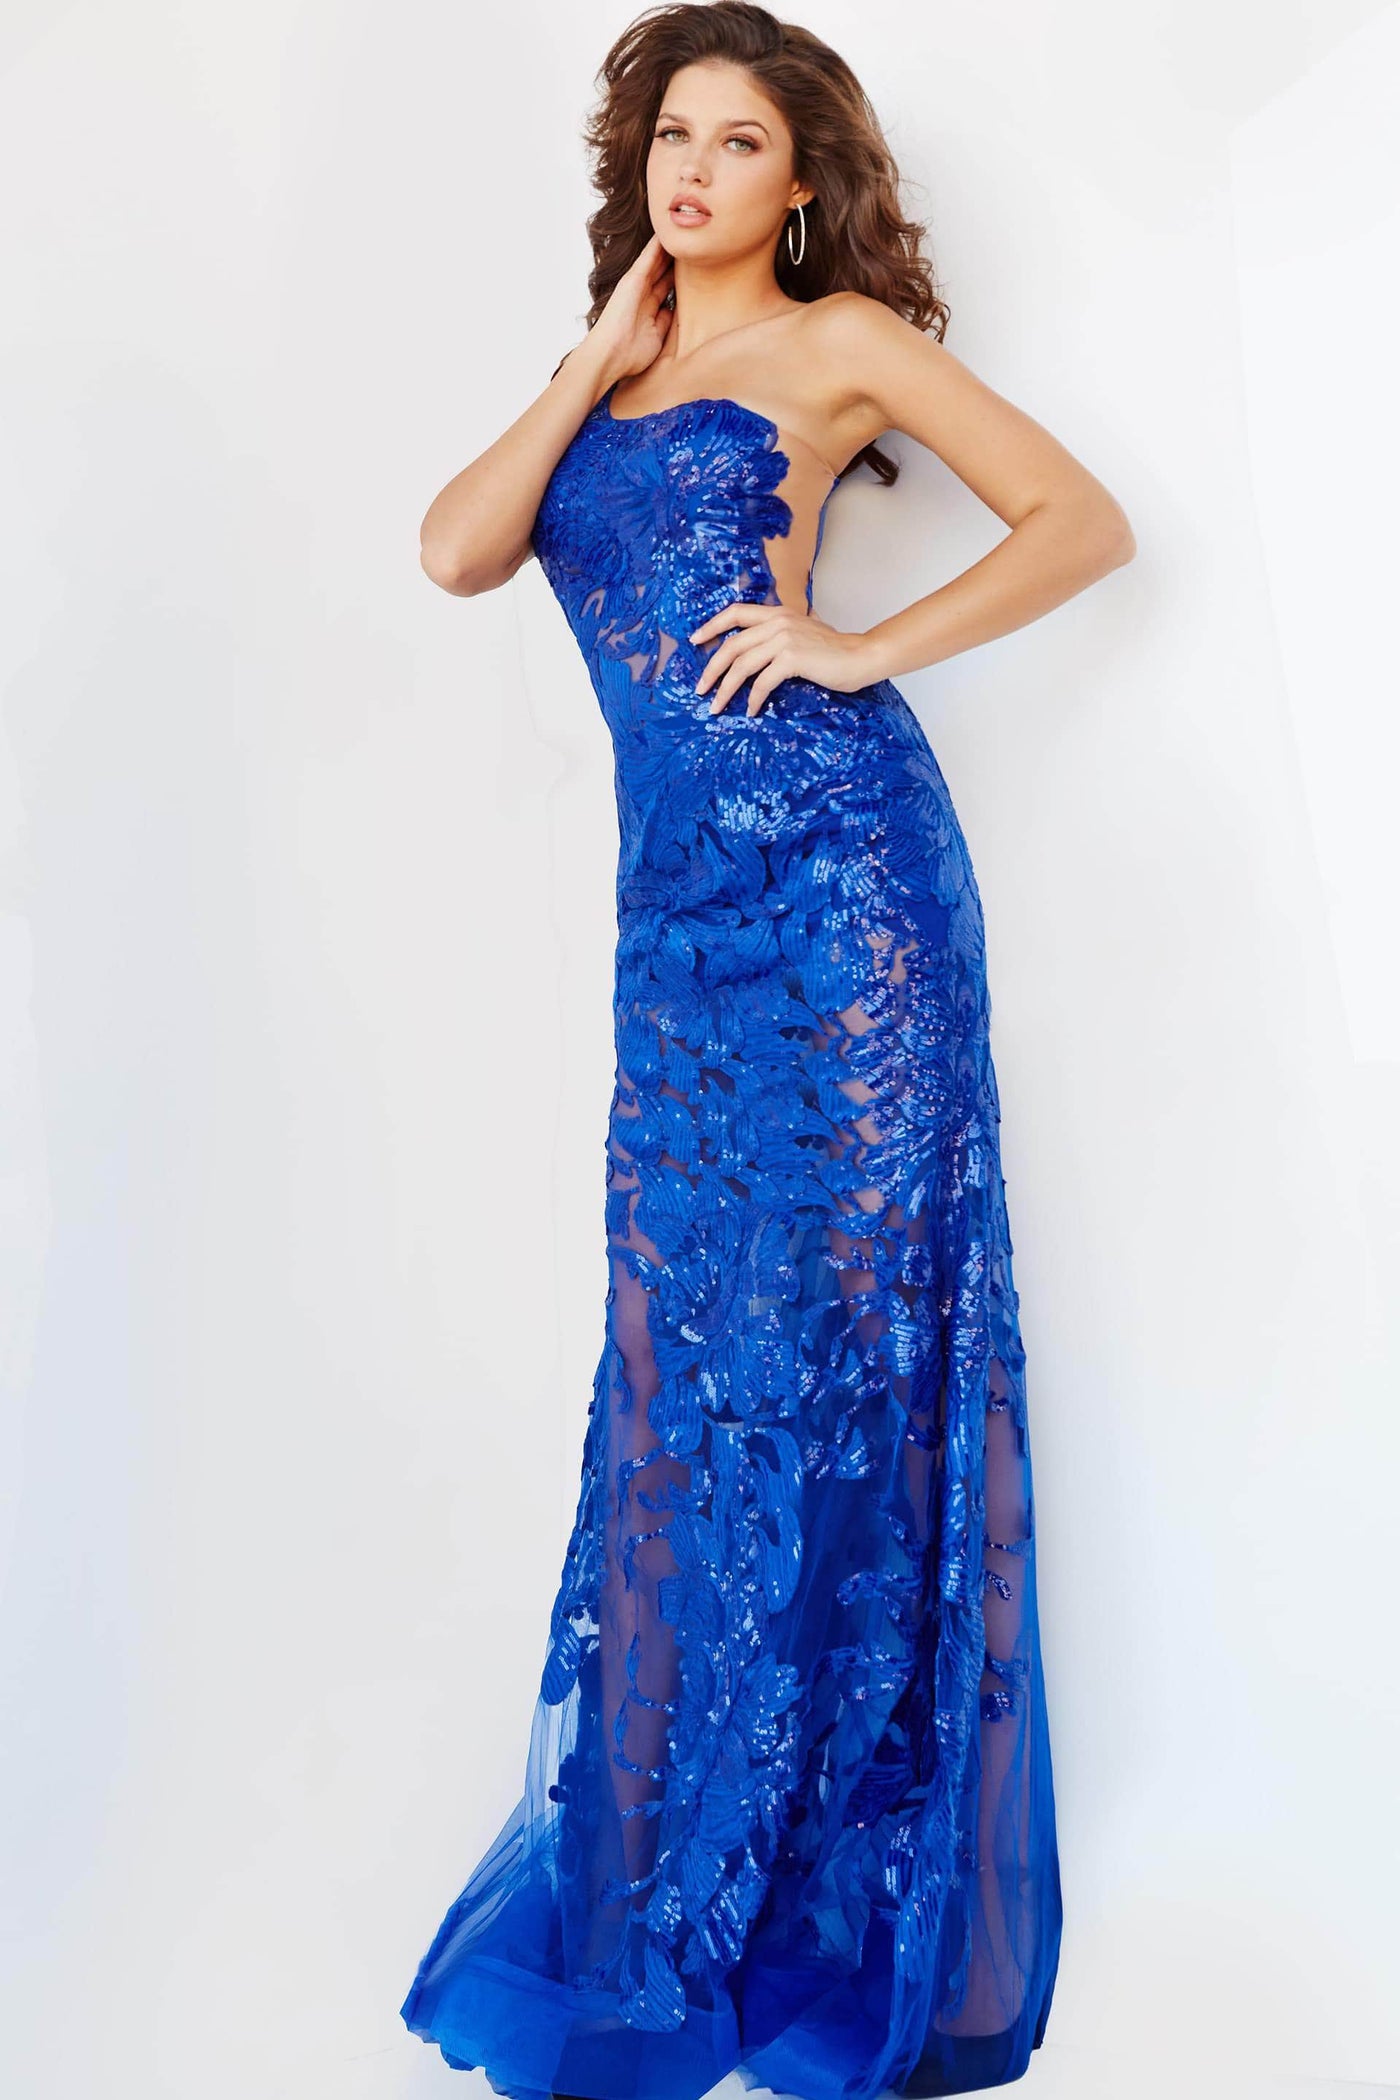 Jovani - 02895 One Shoulder Embellished Illusion Mermaid Gown Prom Dresses 00 / Royal